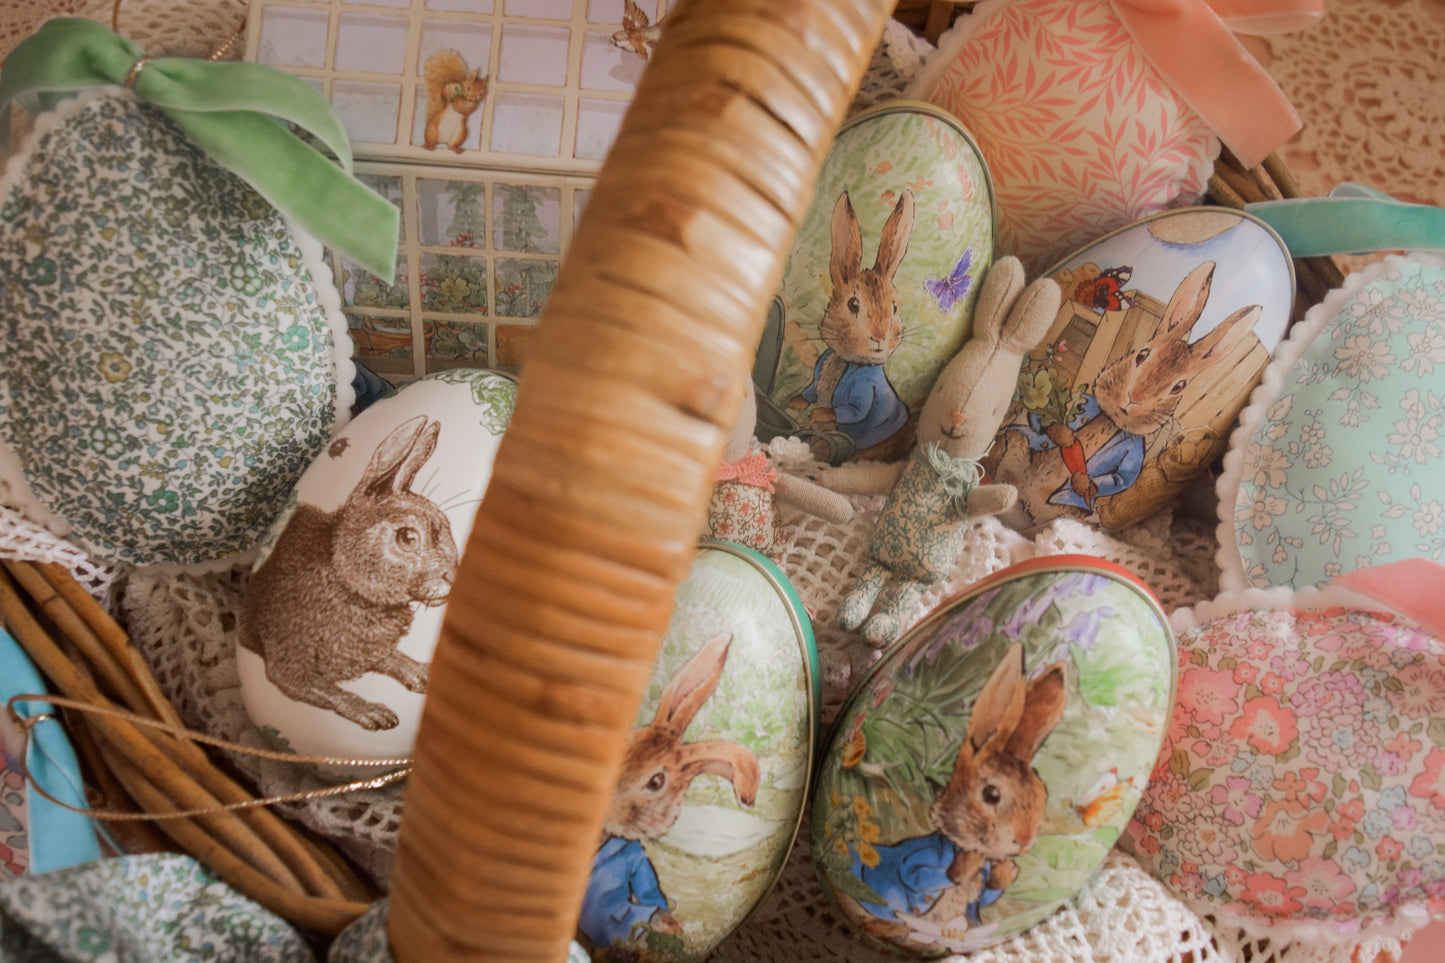 Peter Rabbit Egg Tins - Assorted